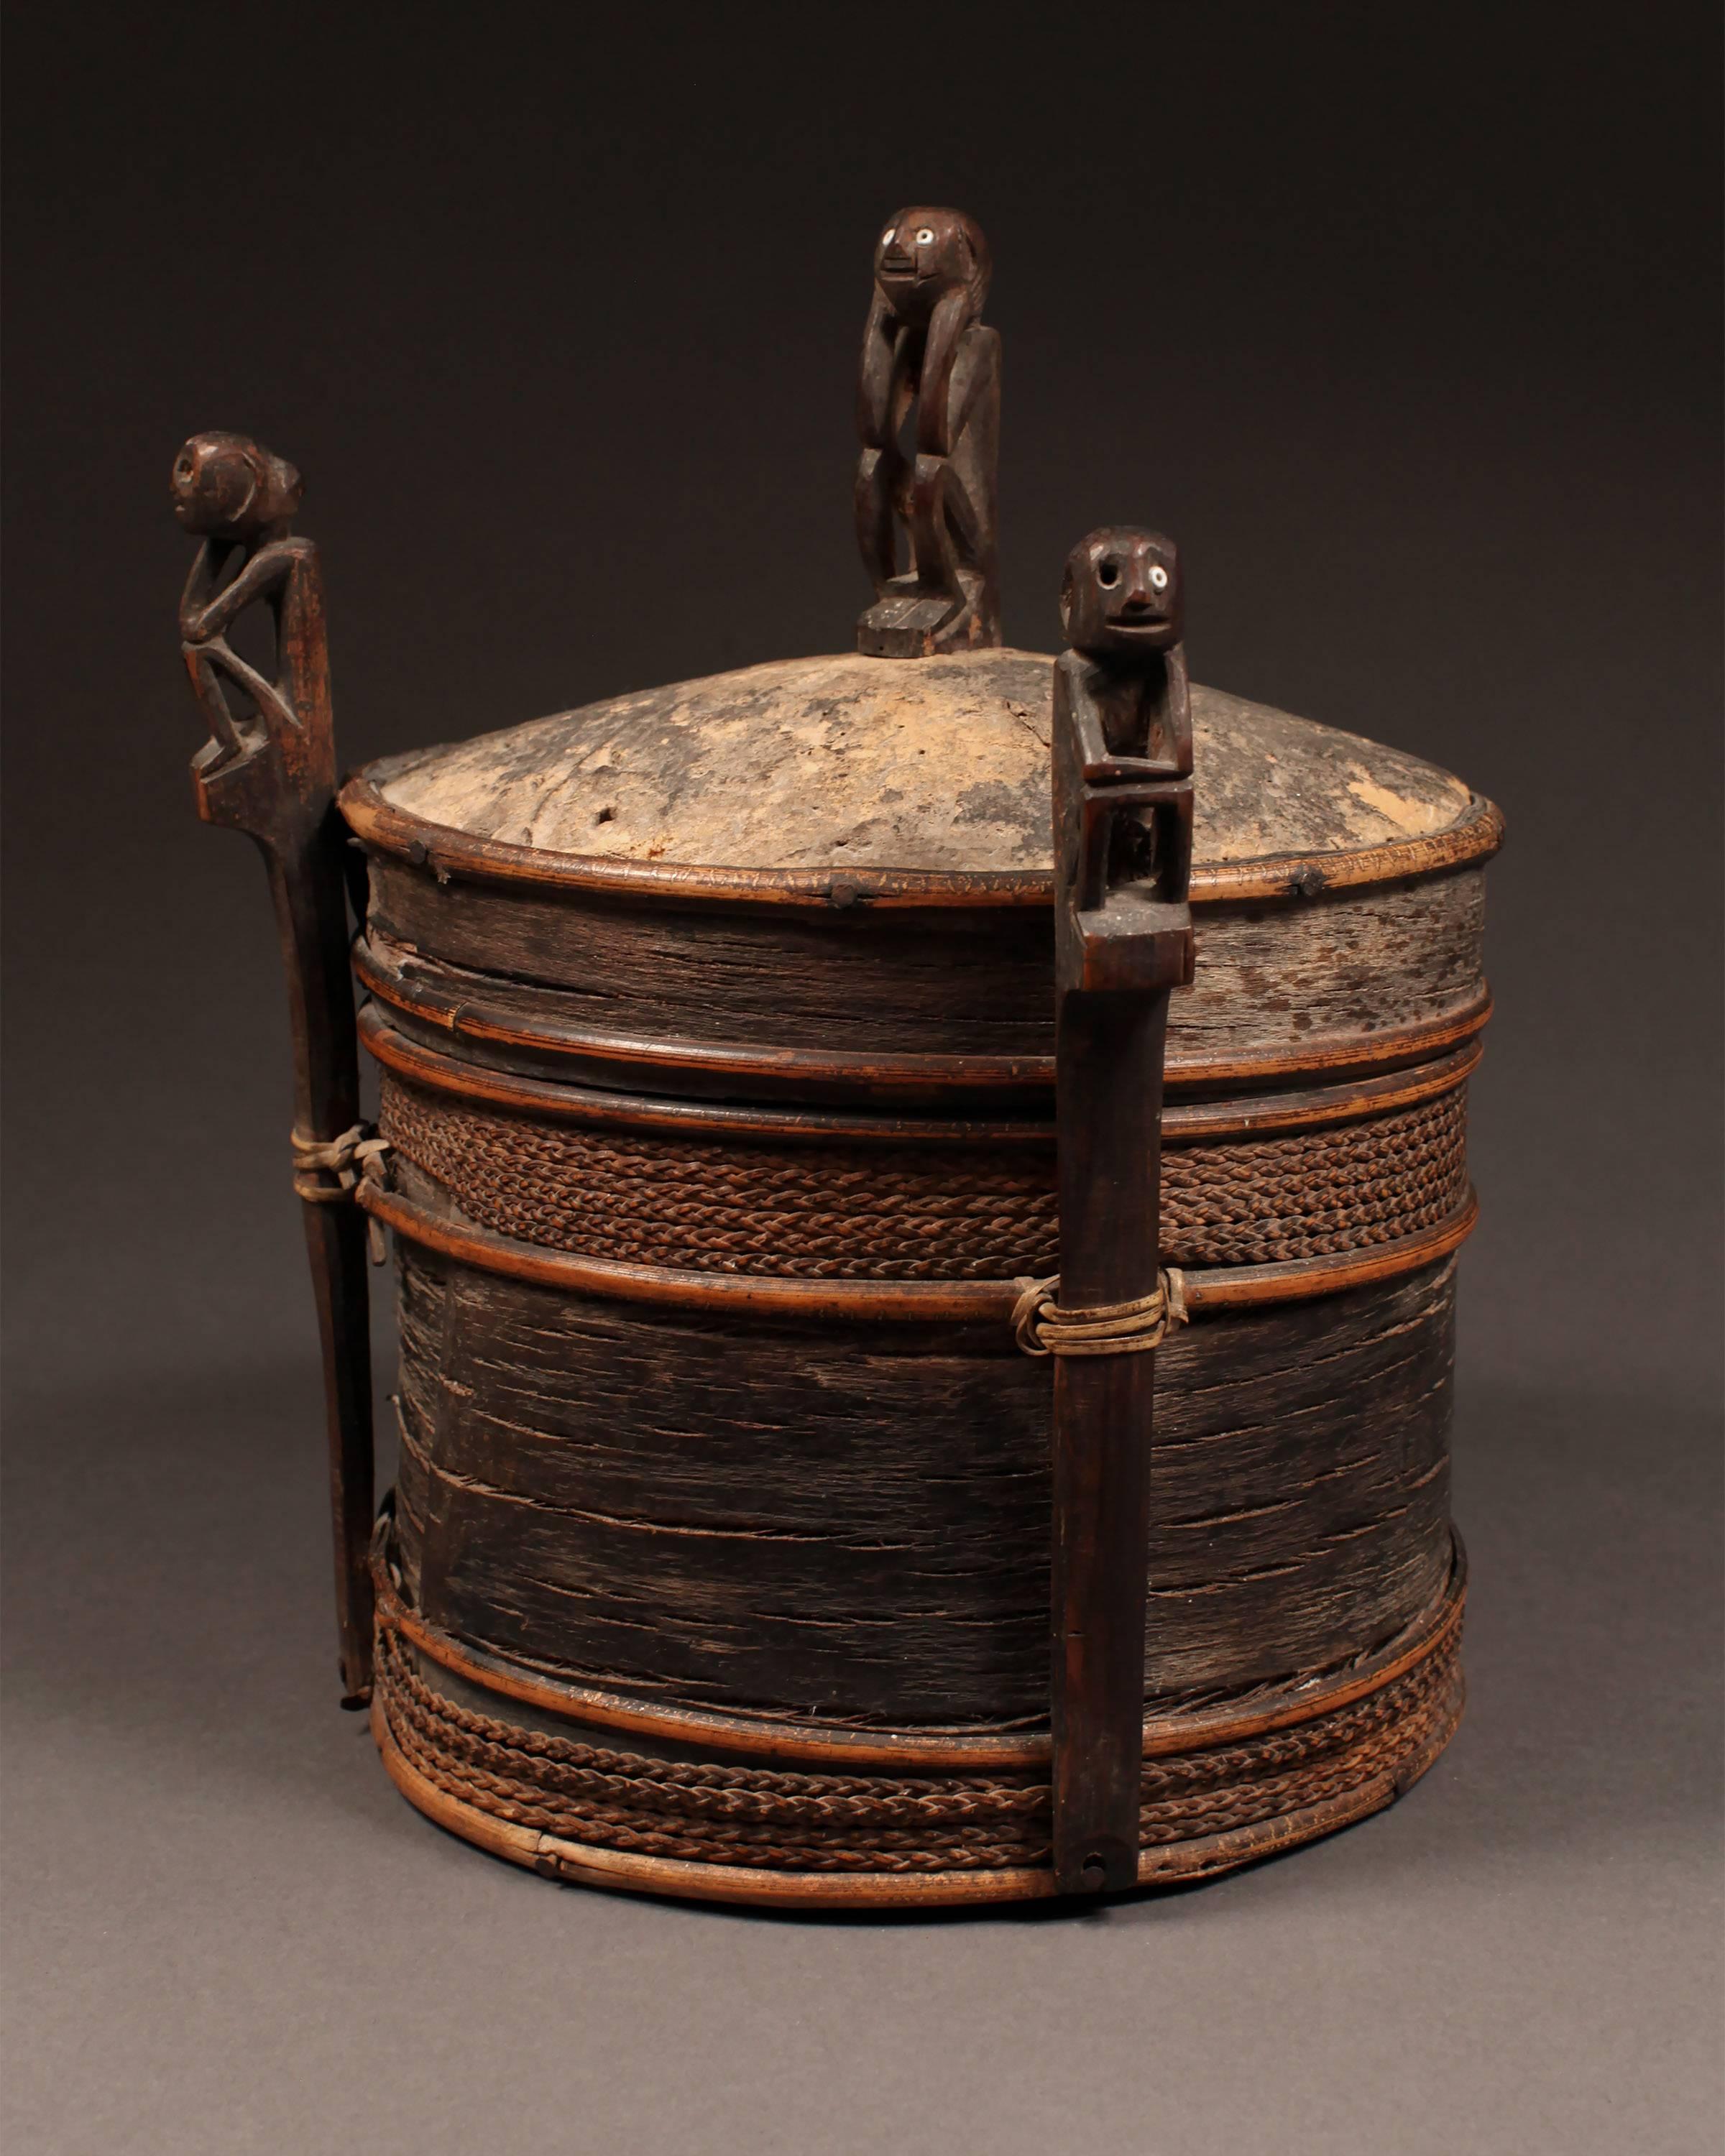 Dayak Shaman's box
Iban Dayak, Sarawak, Malaysia
Late 19th-early 20th century
Wood, bark, rattan, bamboo, braided fiber.